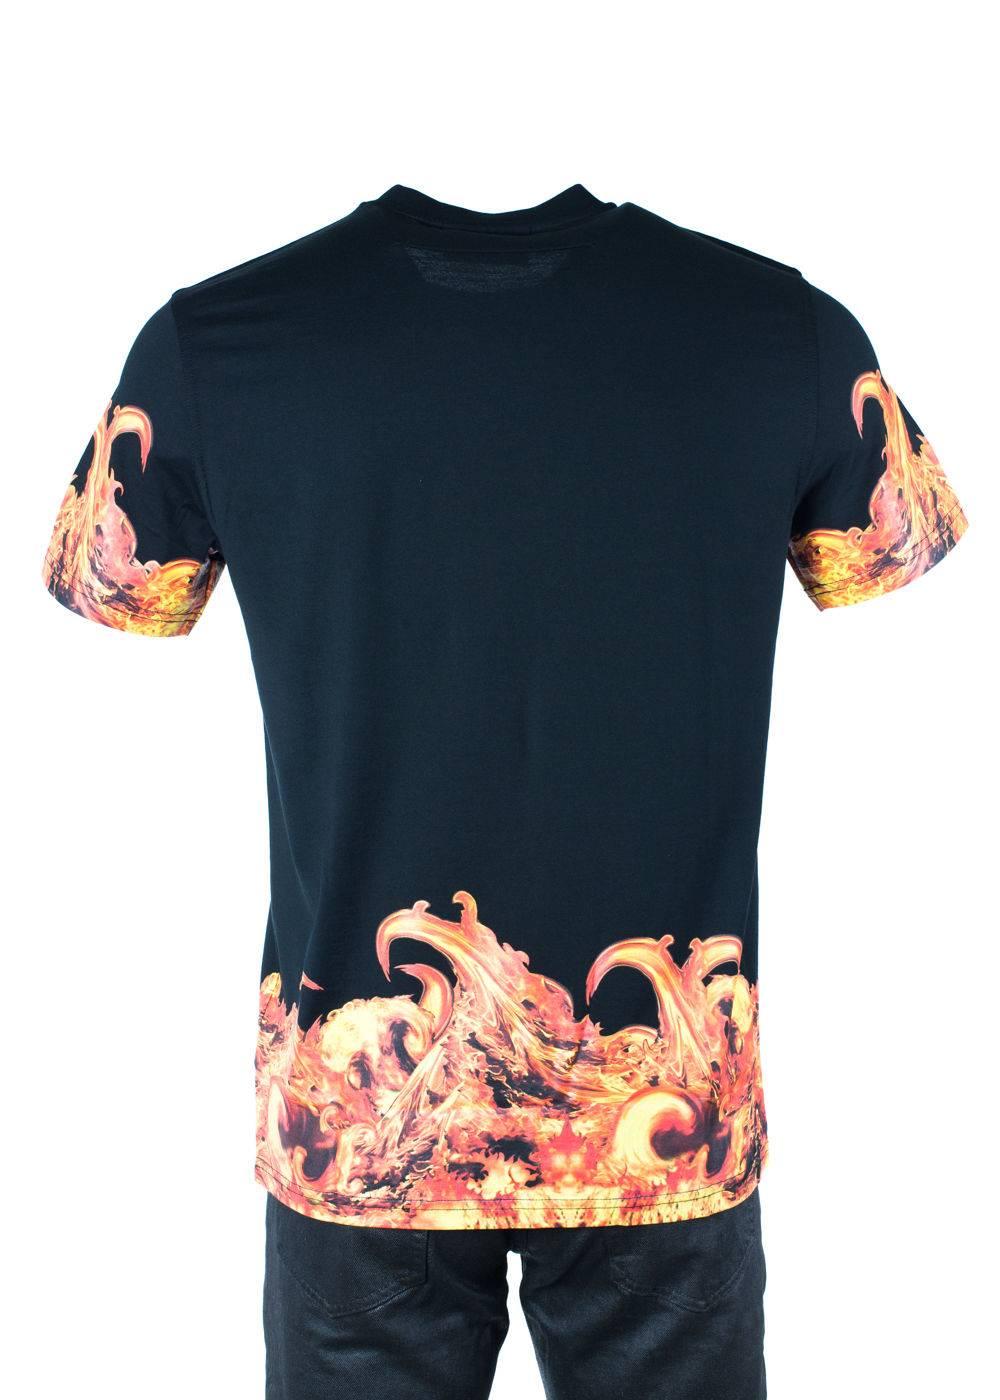 black flames shirt